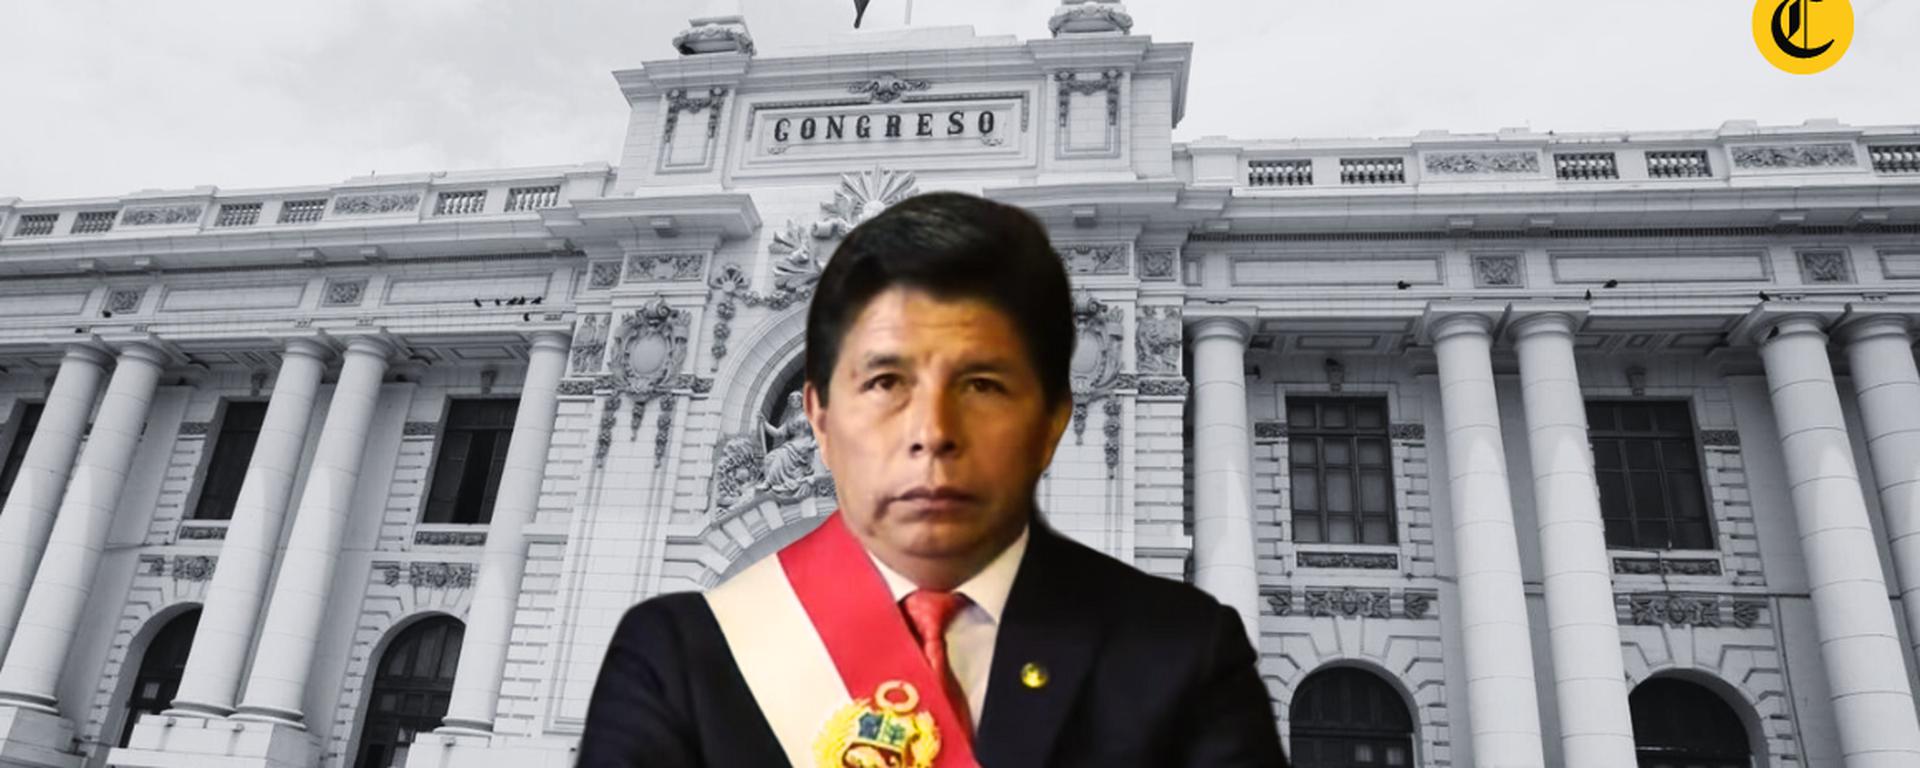 Pedro Castillo: Ocho testigos coinciden en que se intentó cerrar el Congreso tras golpe de Estado